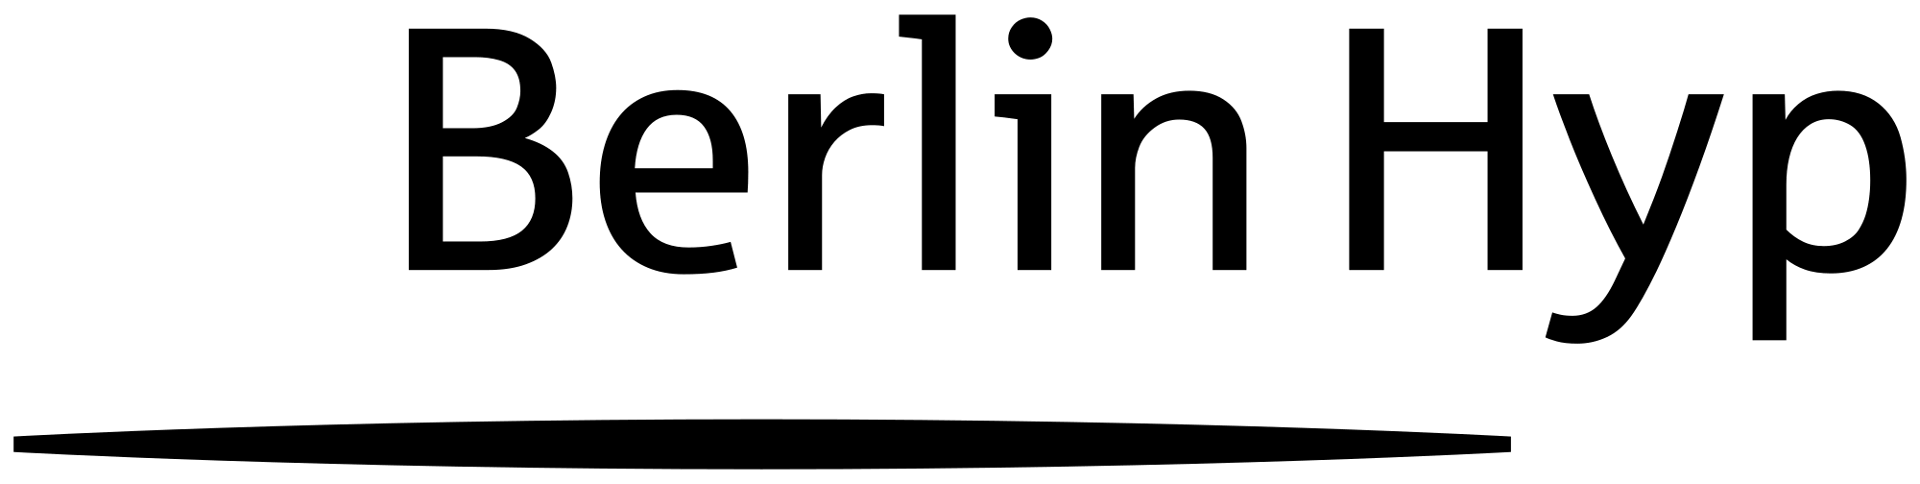 black logo berlin hyp